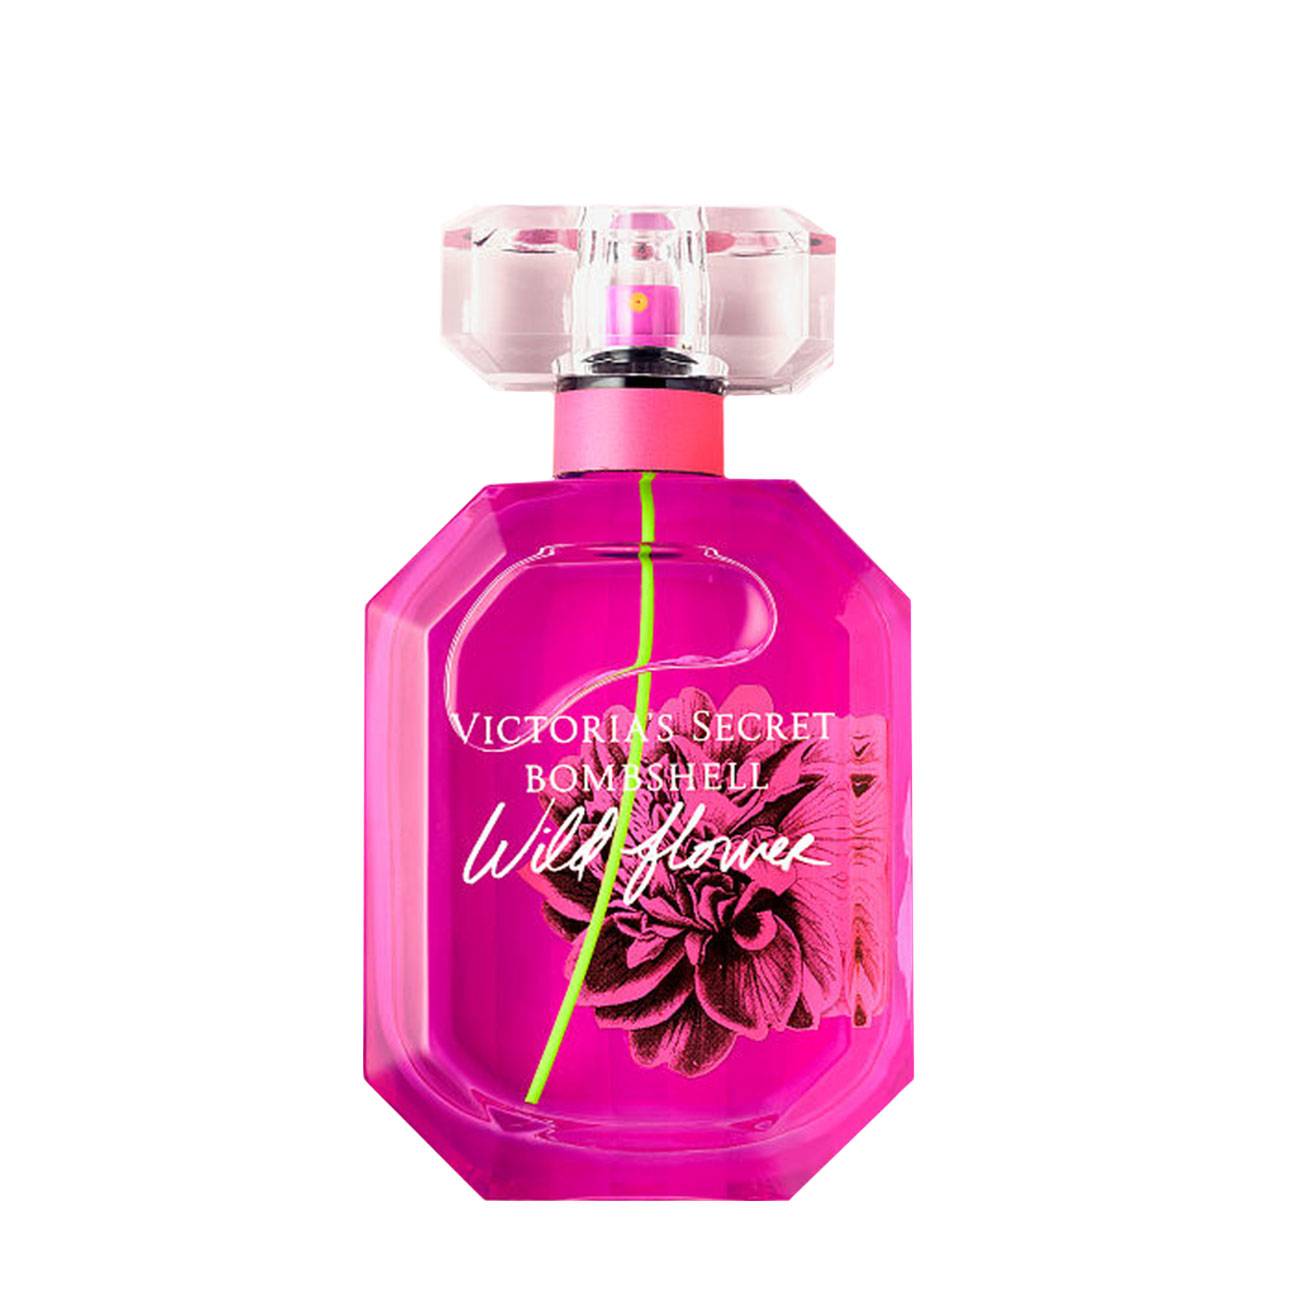 Apa de Parfum Victoria's Secret BOMBSHELL WILD FLOWER 100ml cu comanda online